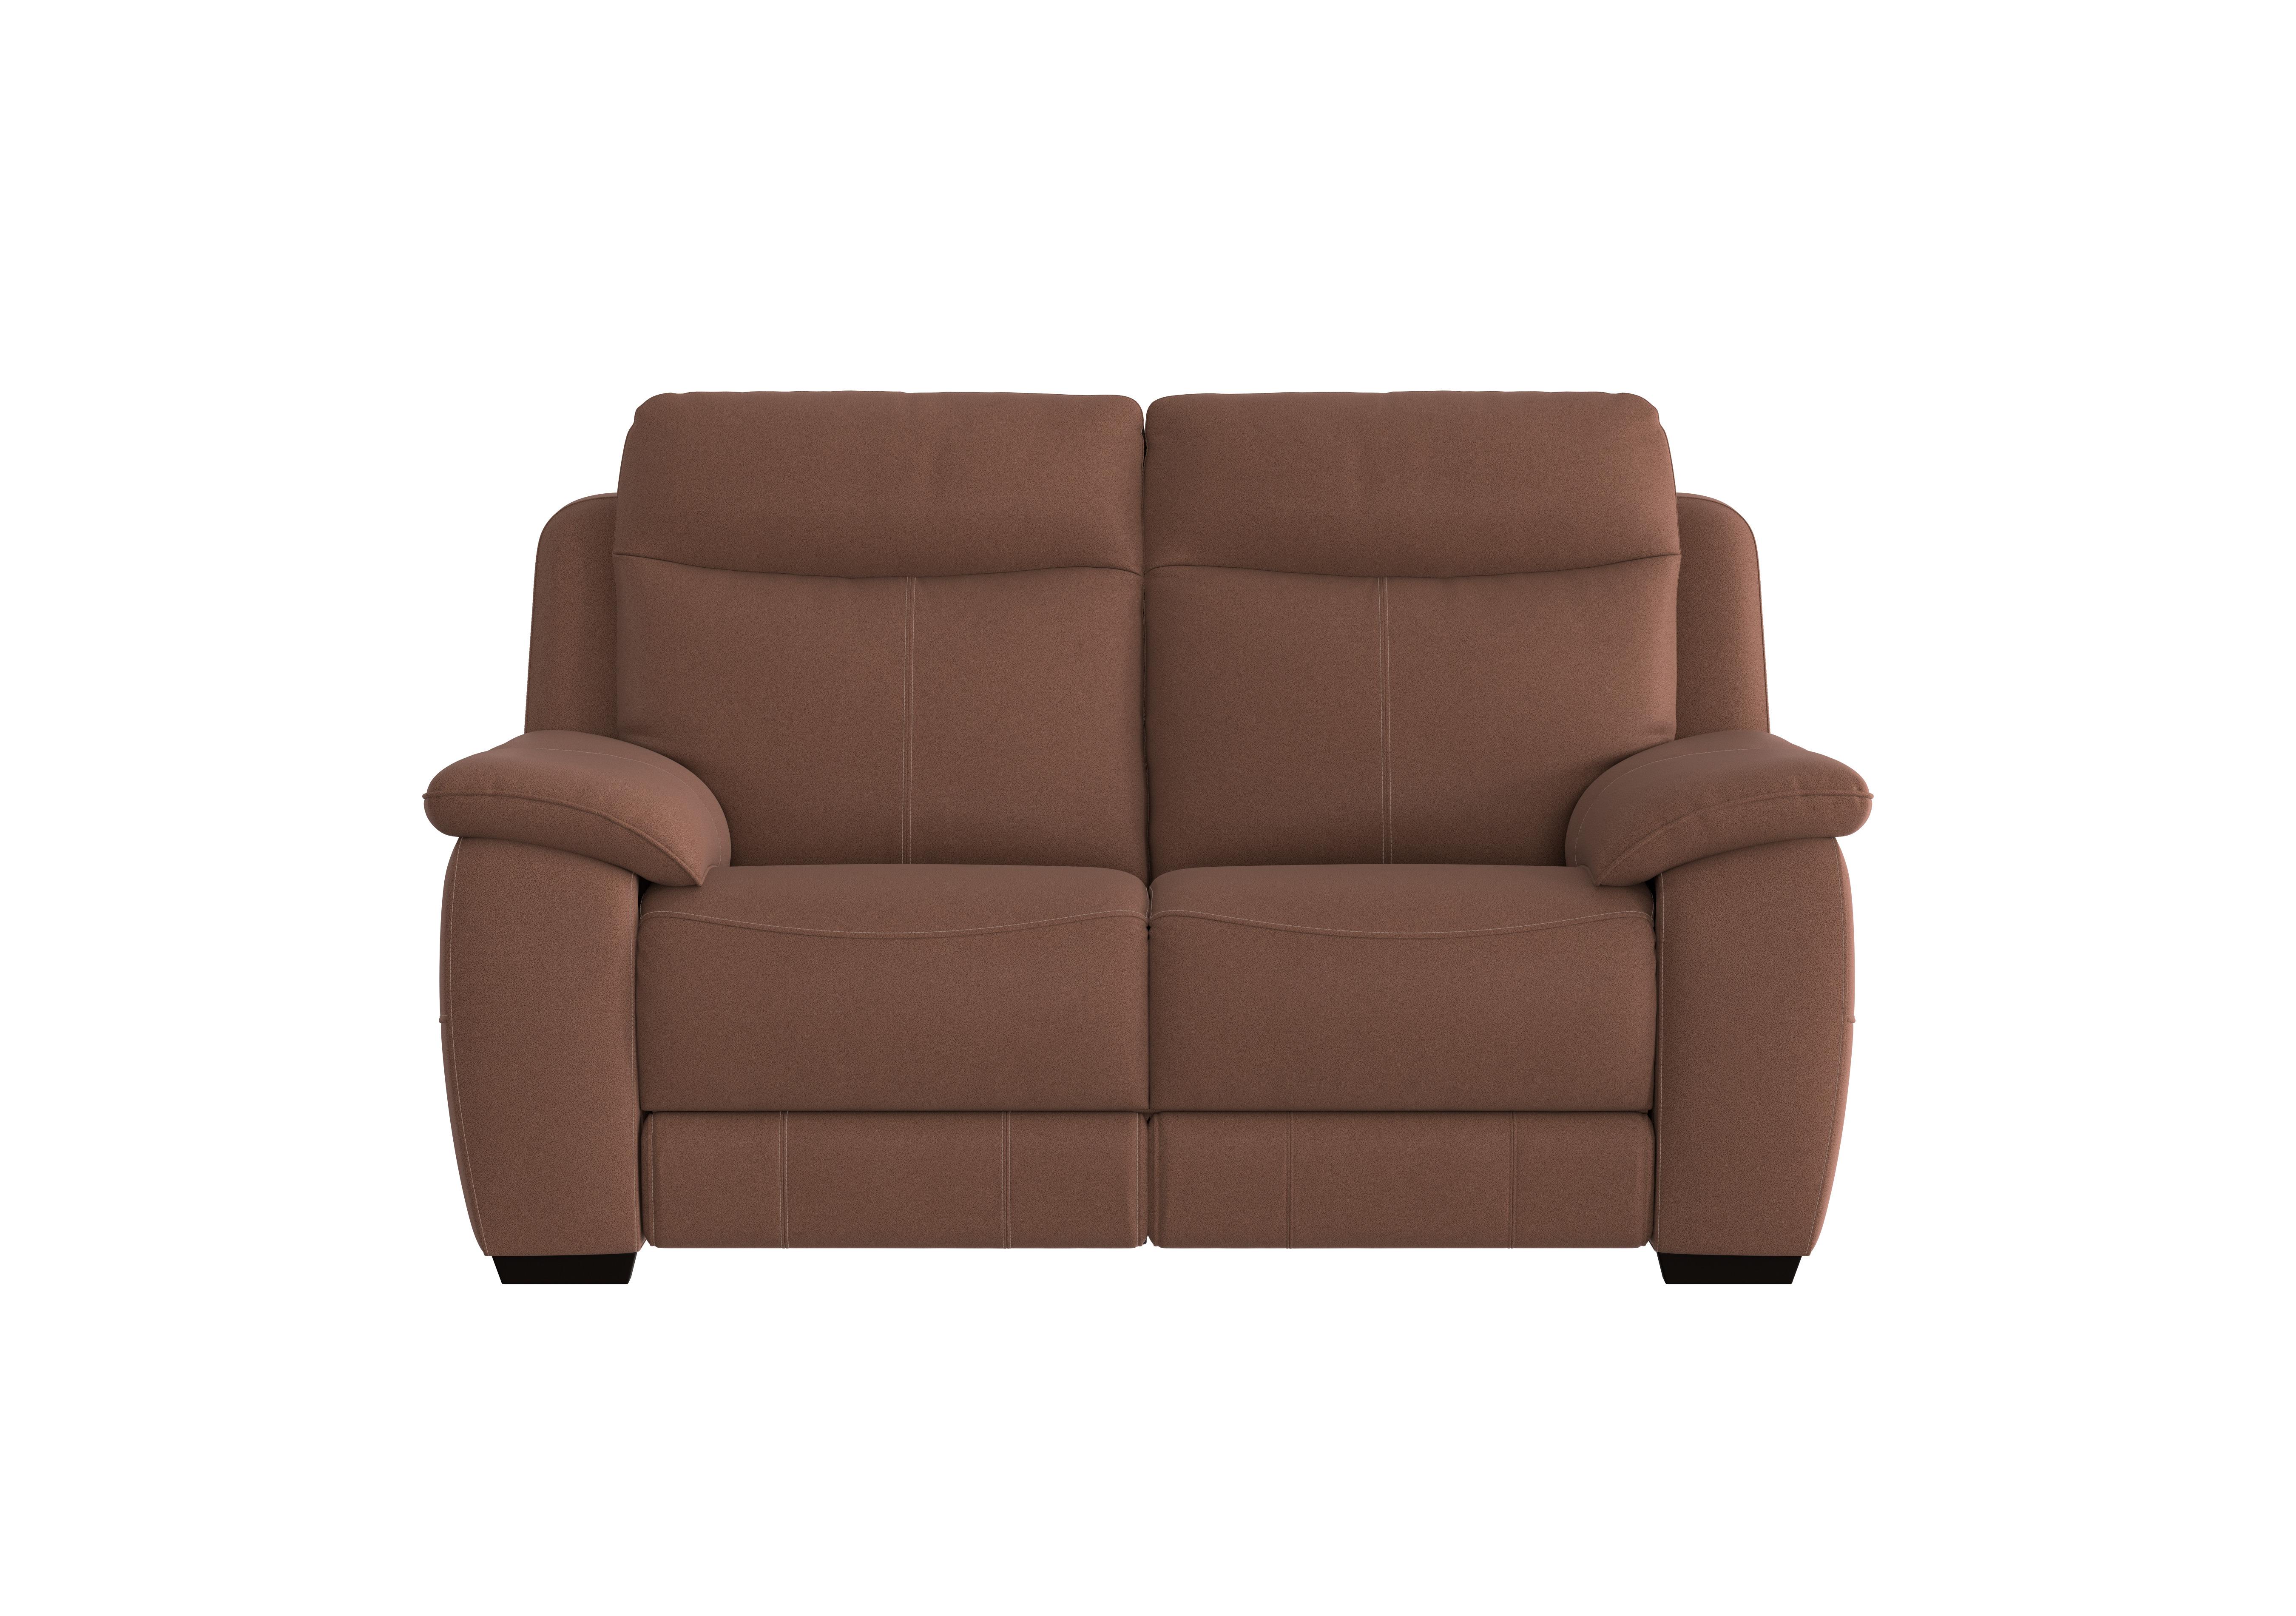 Starlight Express 2 Seater Fabric Recliner Sofa with Power Headrests in Bfa-Blj-R05 Hazelnut on Furniture Village